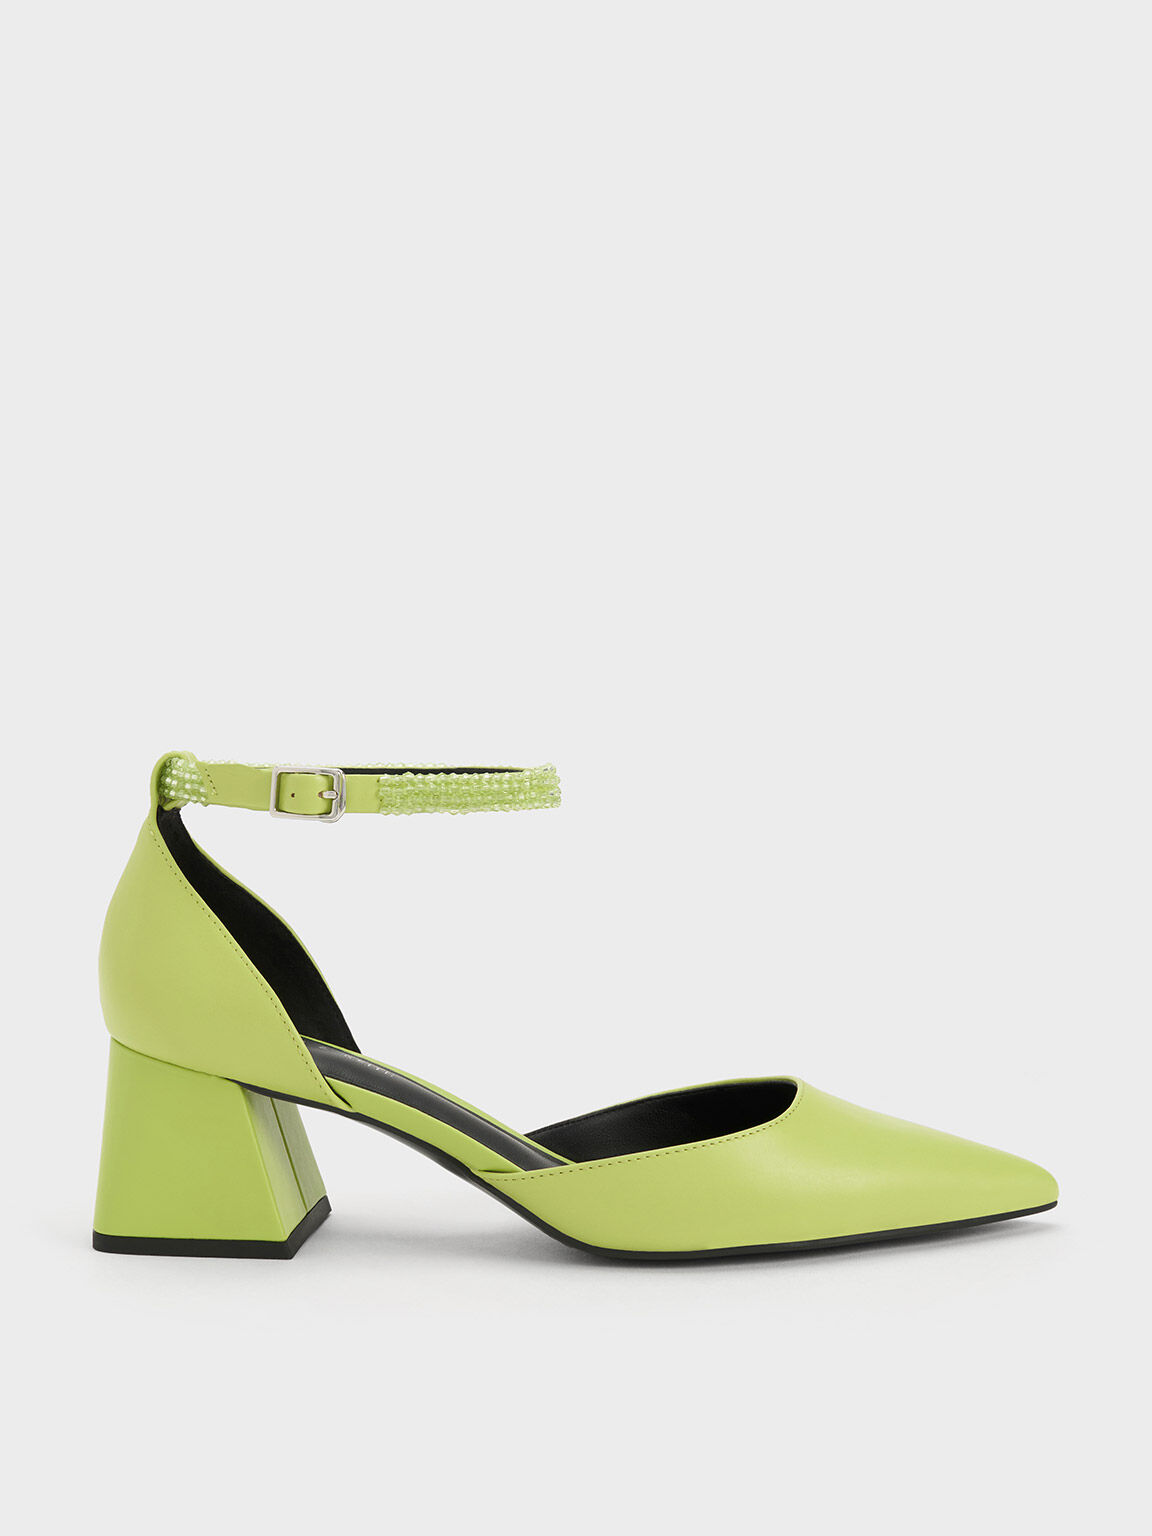 lime: Women's Shoes | Dillard's